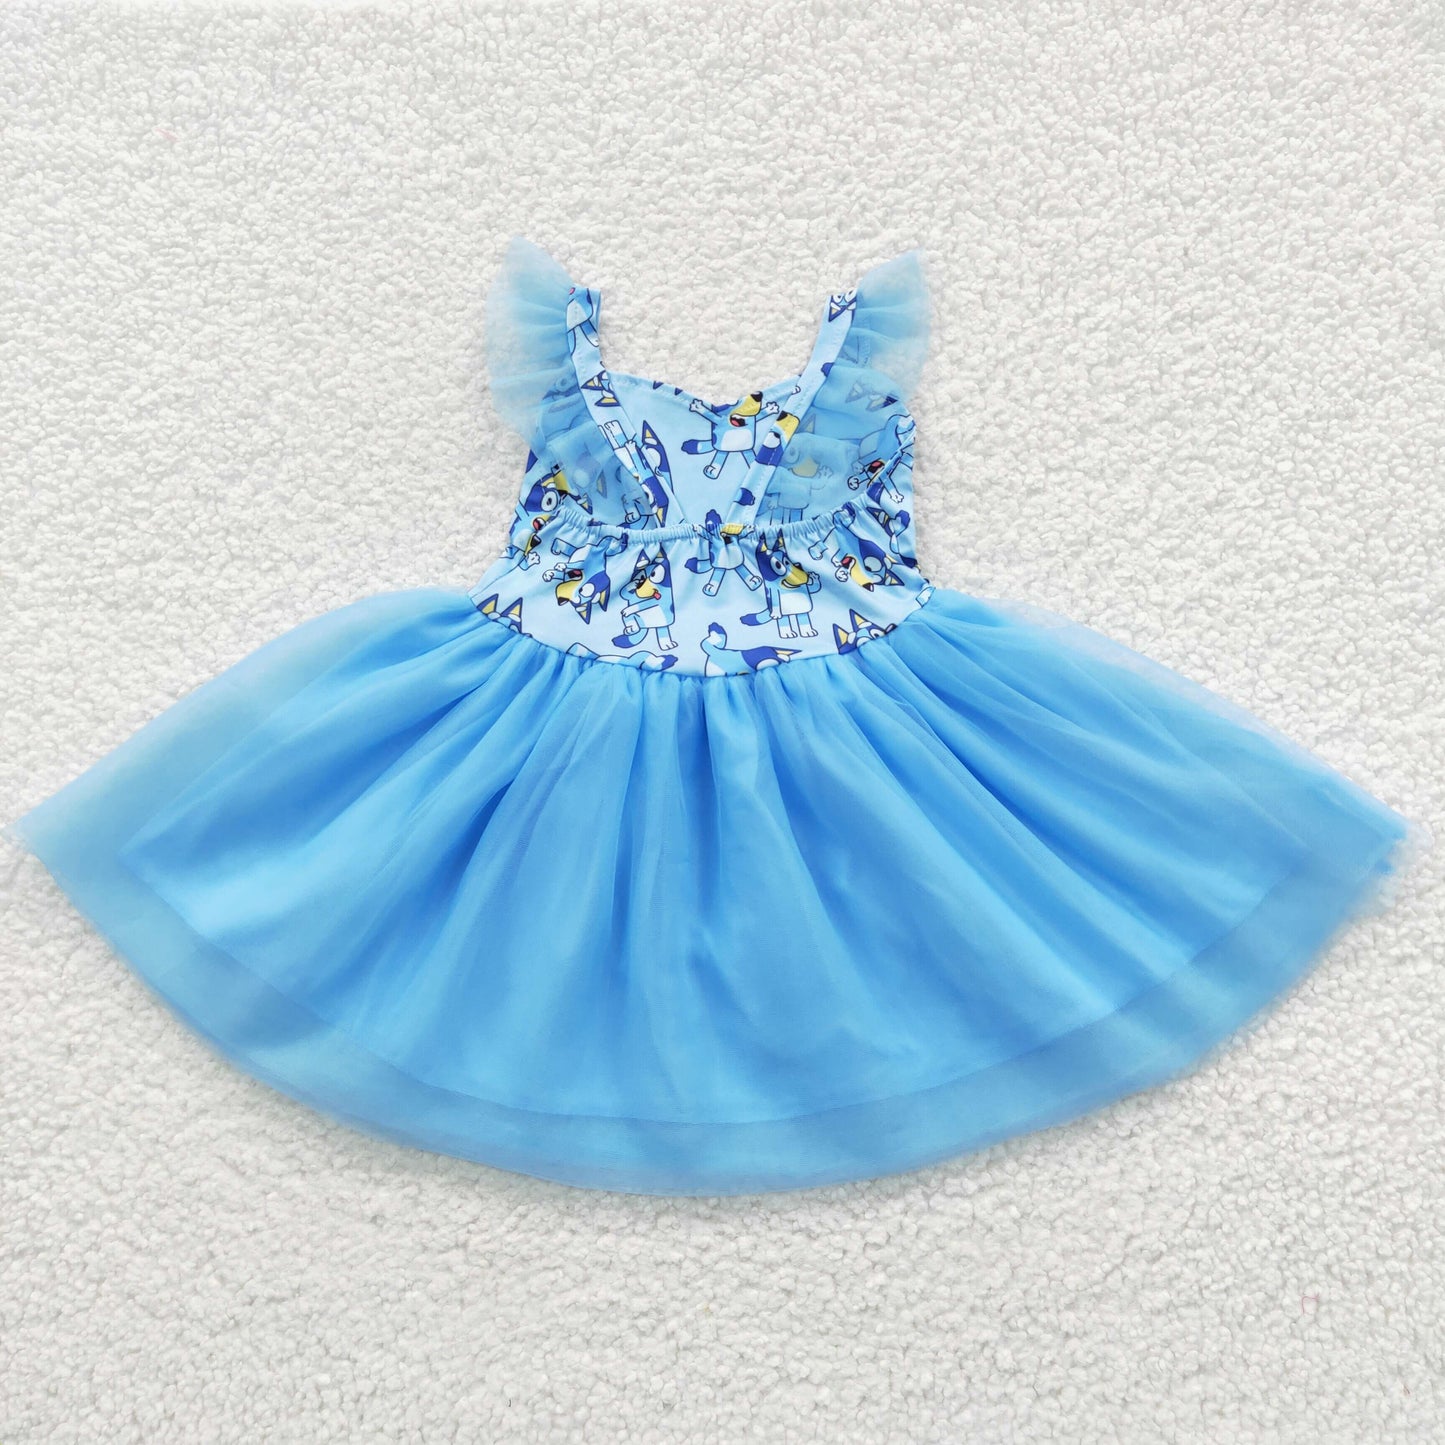 Baby girls short sleeve blue dog cartoon tulle dress